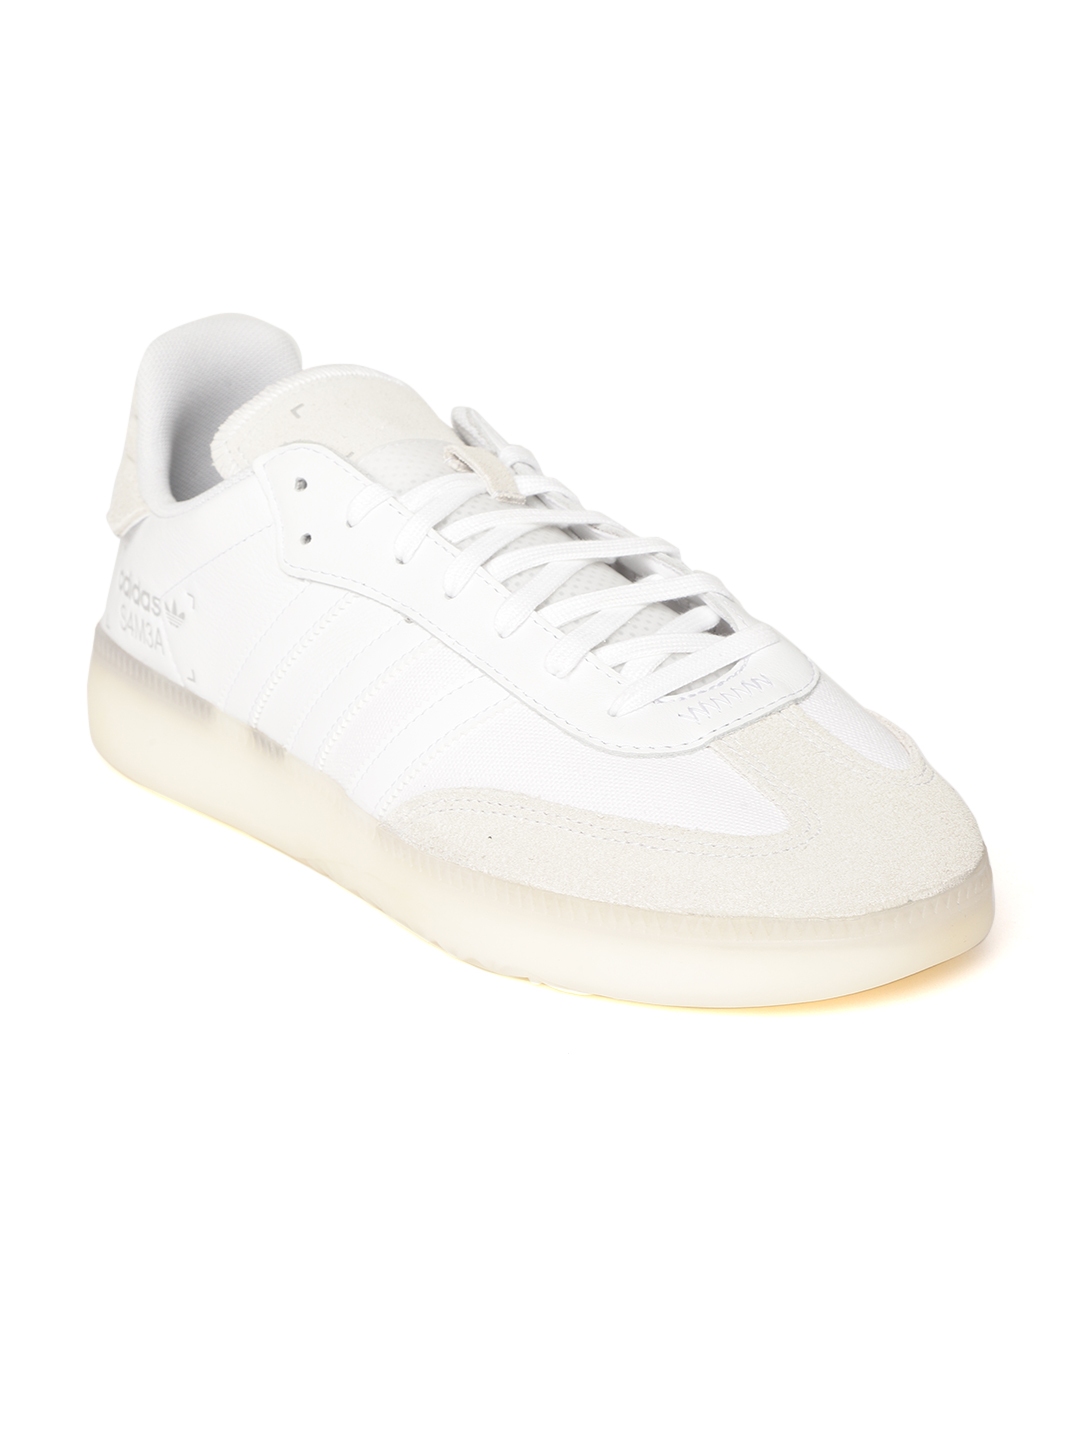 samba rm shoes white